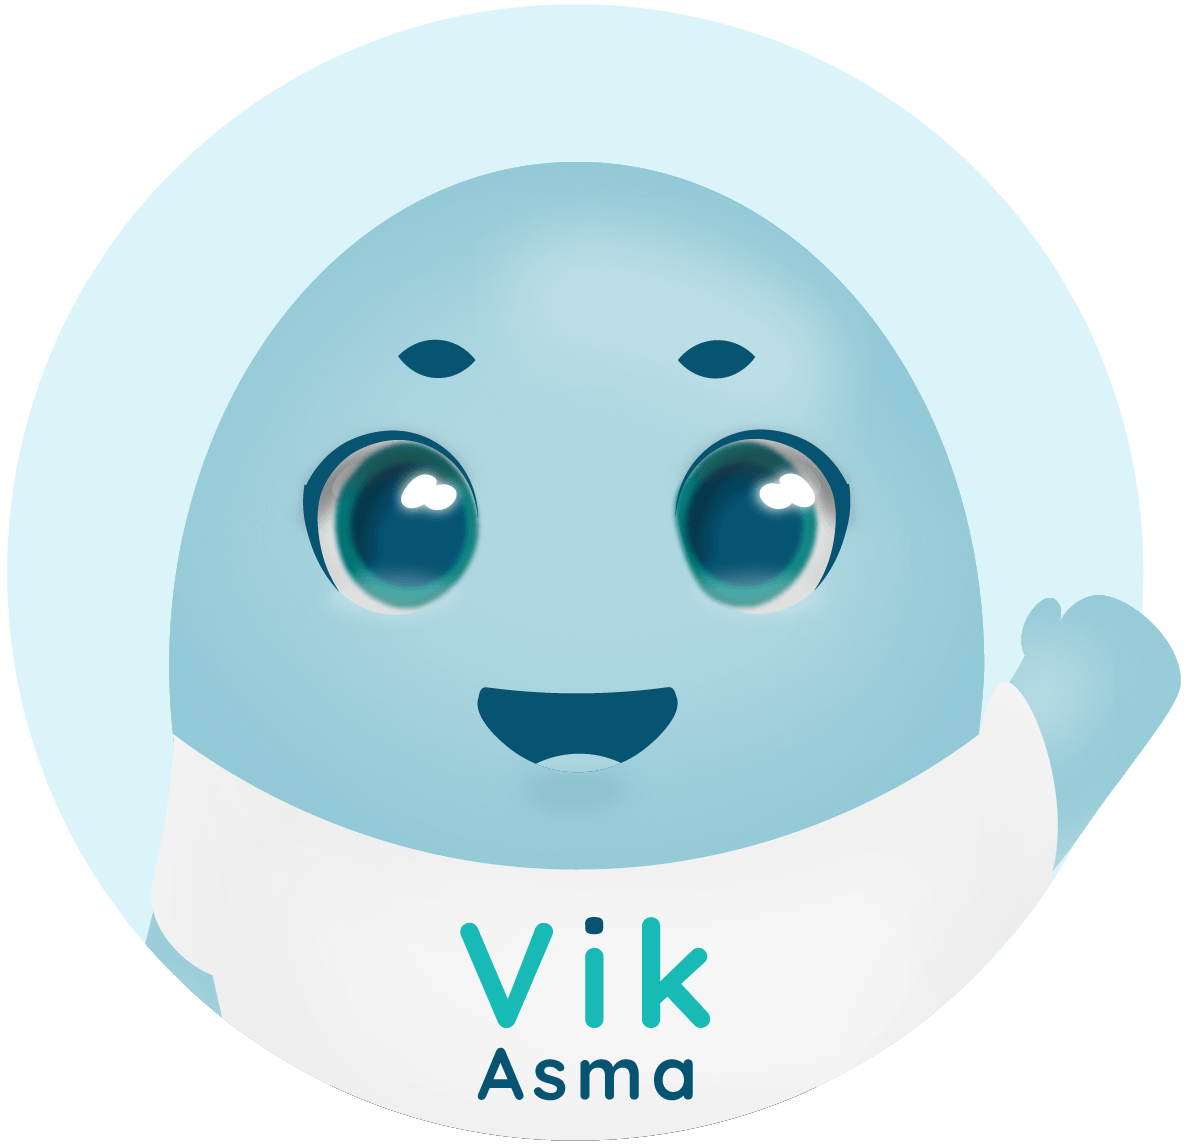 Avatar de Vik saludando.